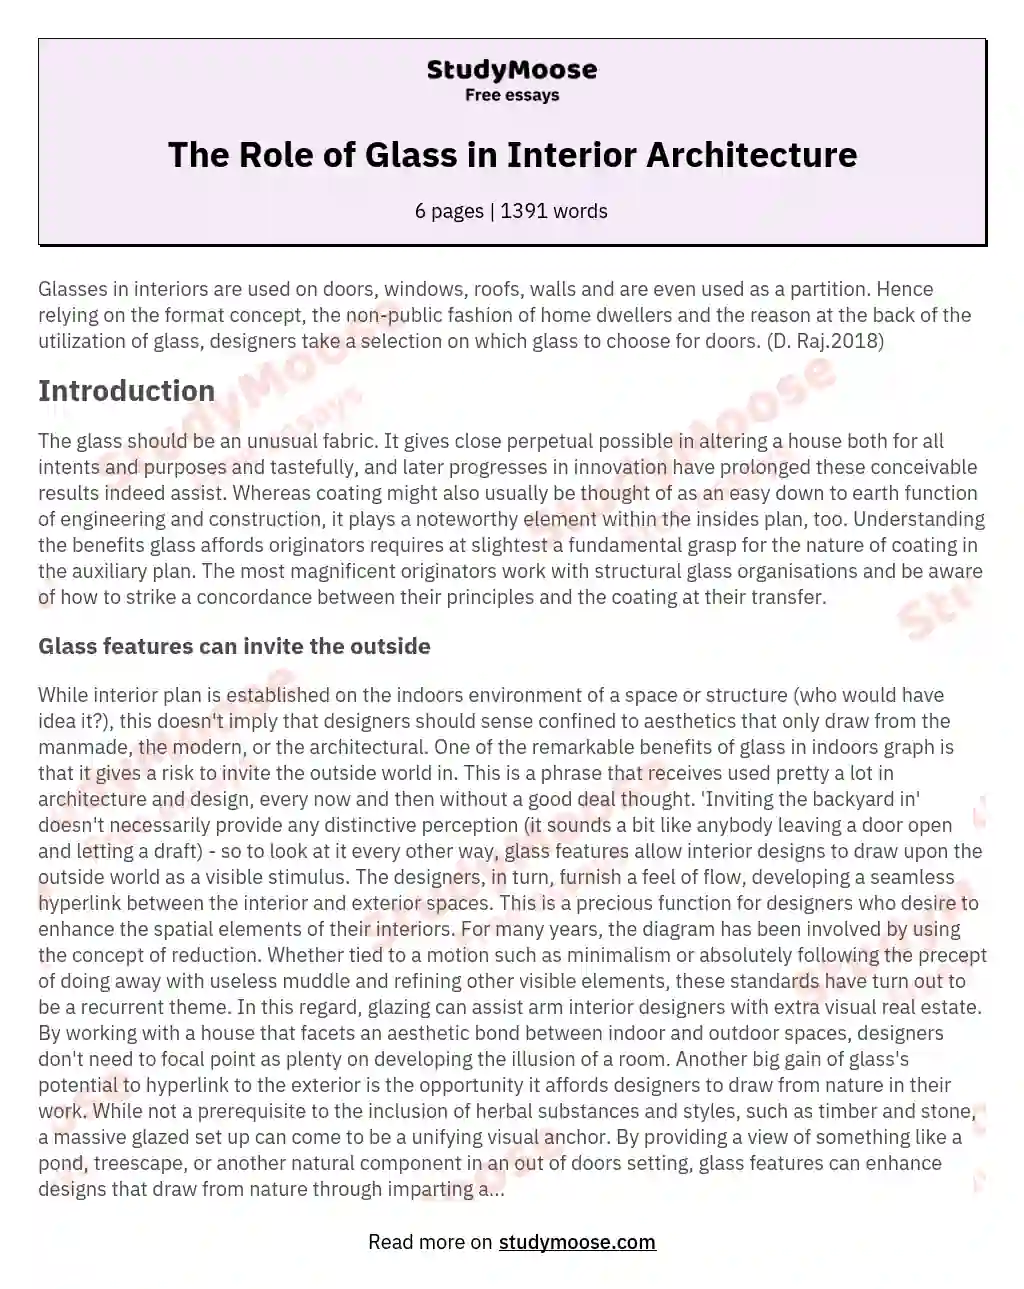 The Role of Glass in Interior Architecture